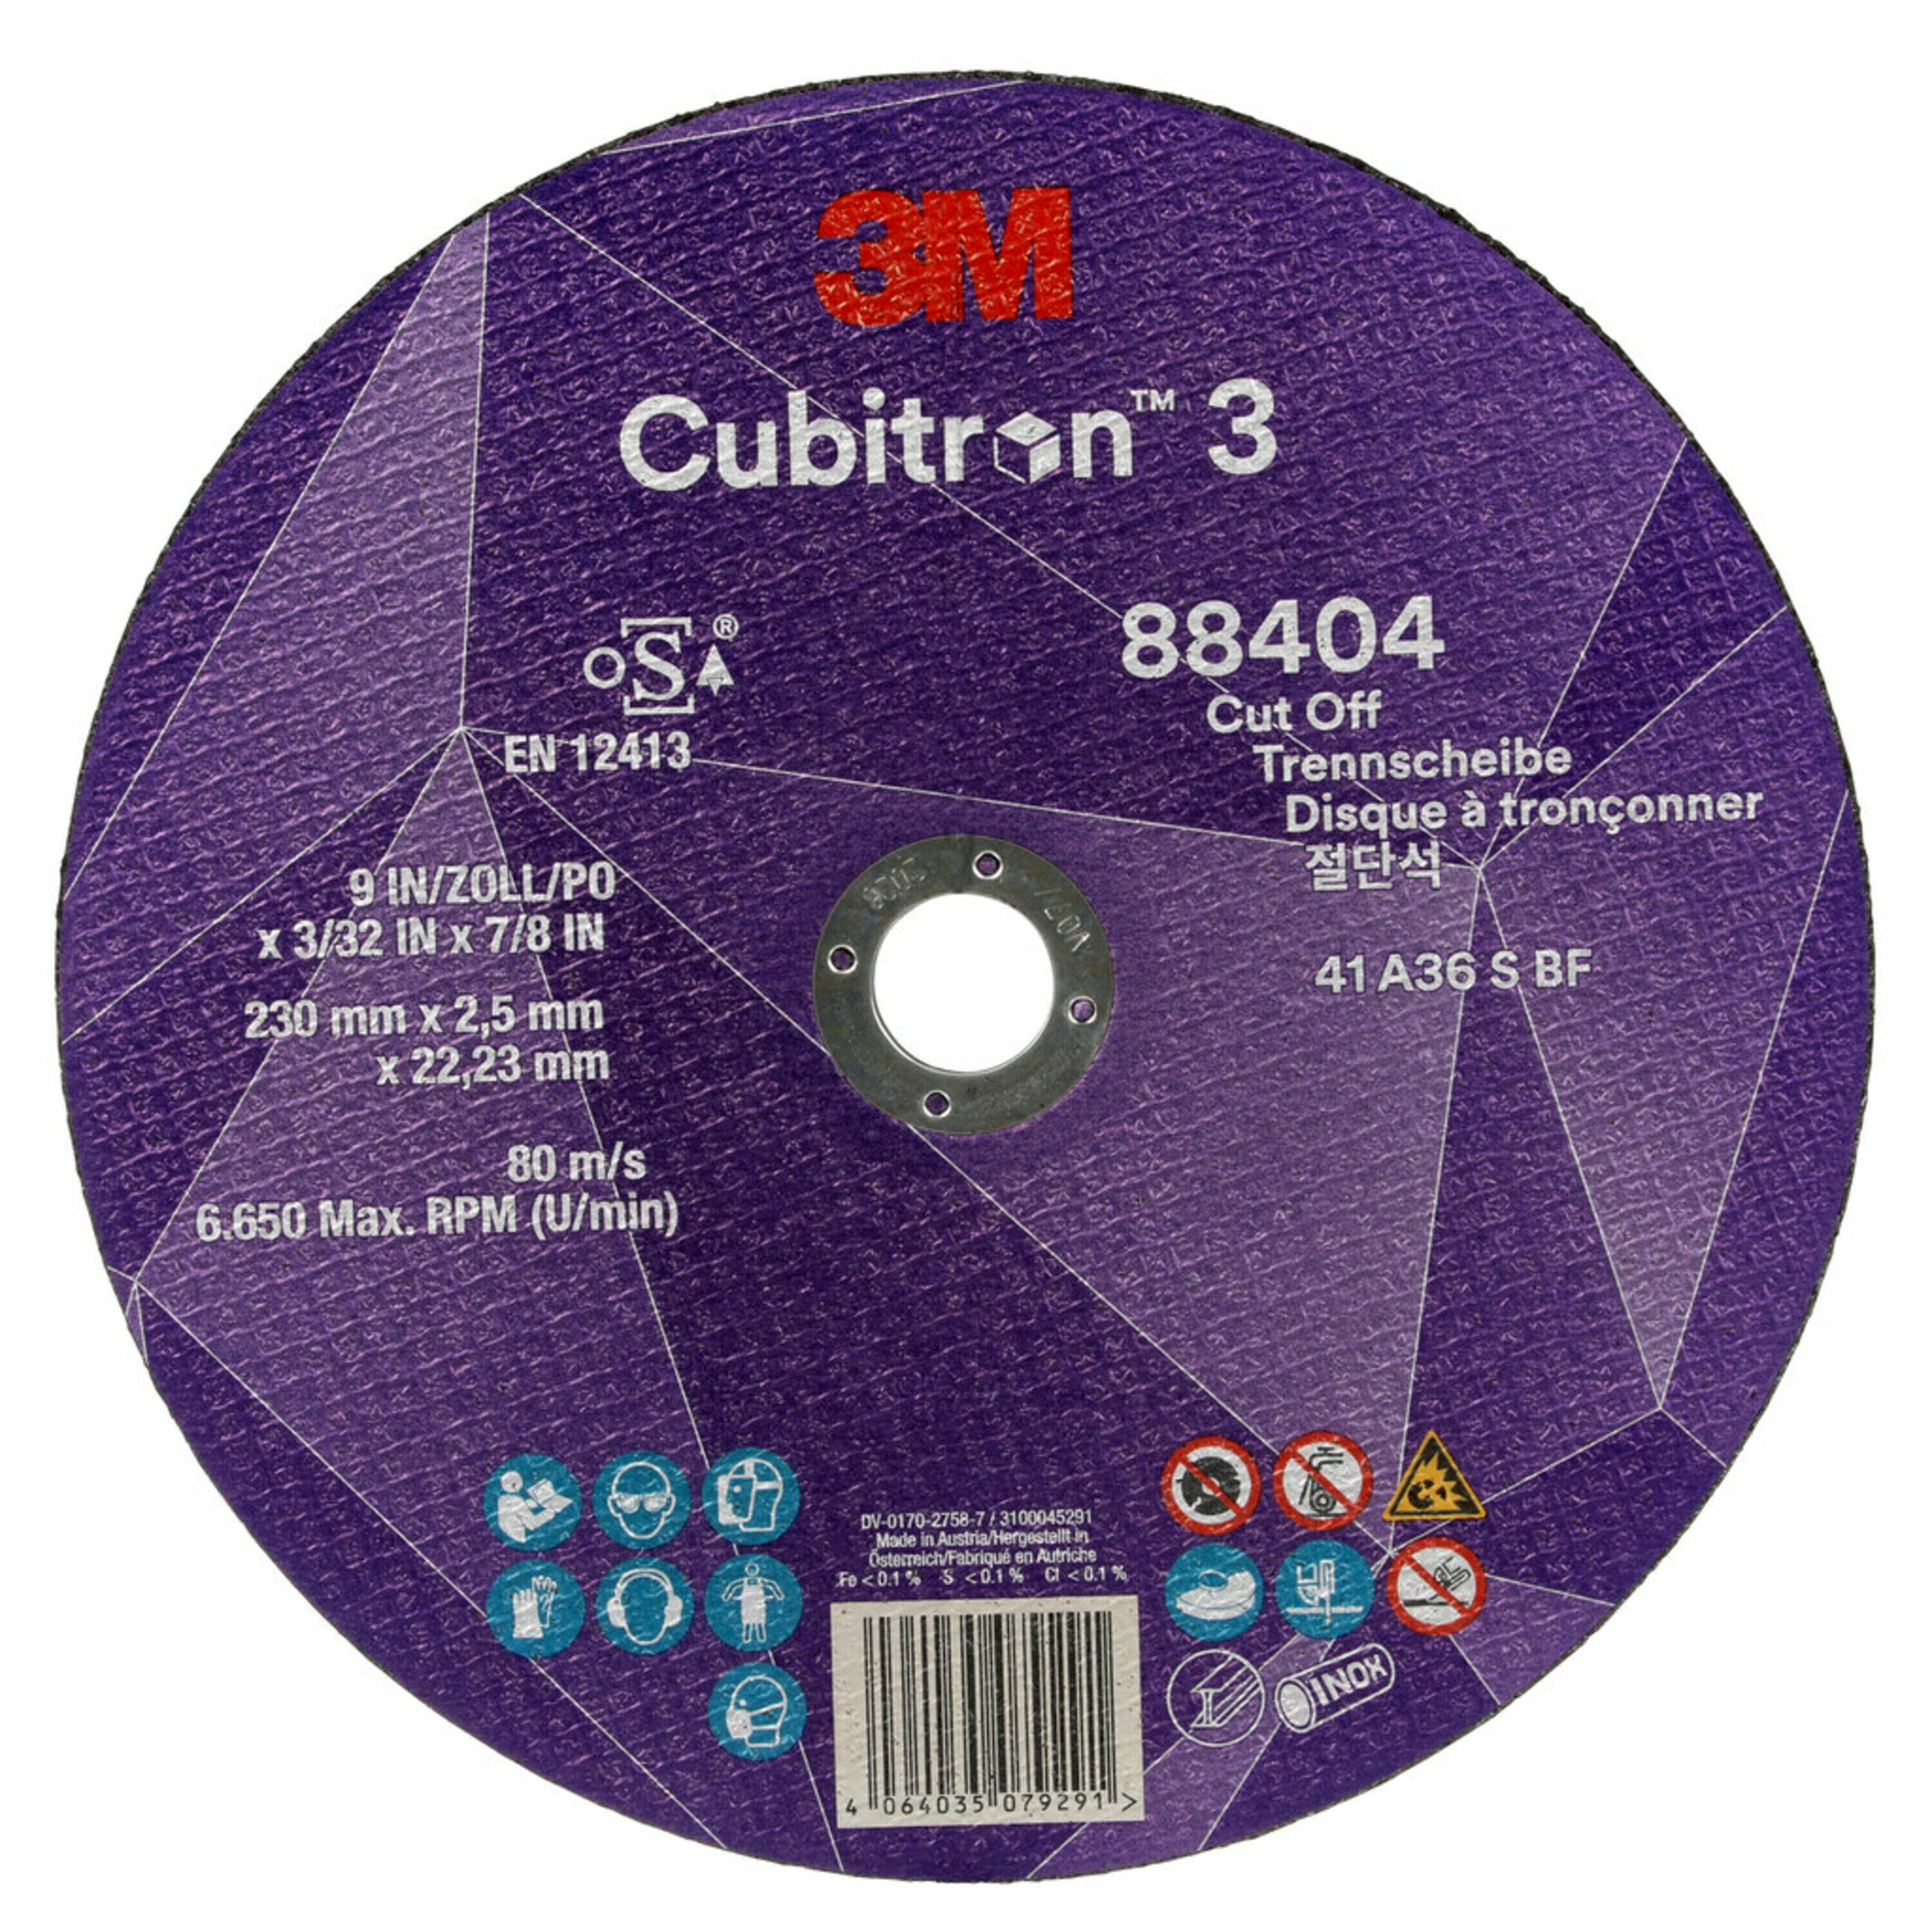 3M Cubitron 3 cut-off wheel, 230 mm, 2.5 mm, 22.23 mm, 36 , type 41 #88404